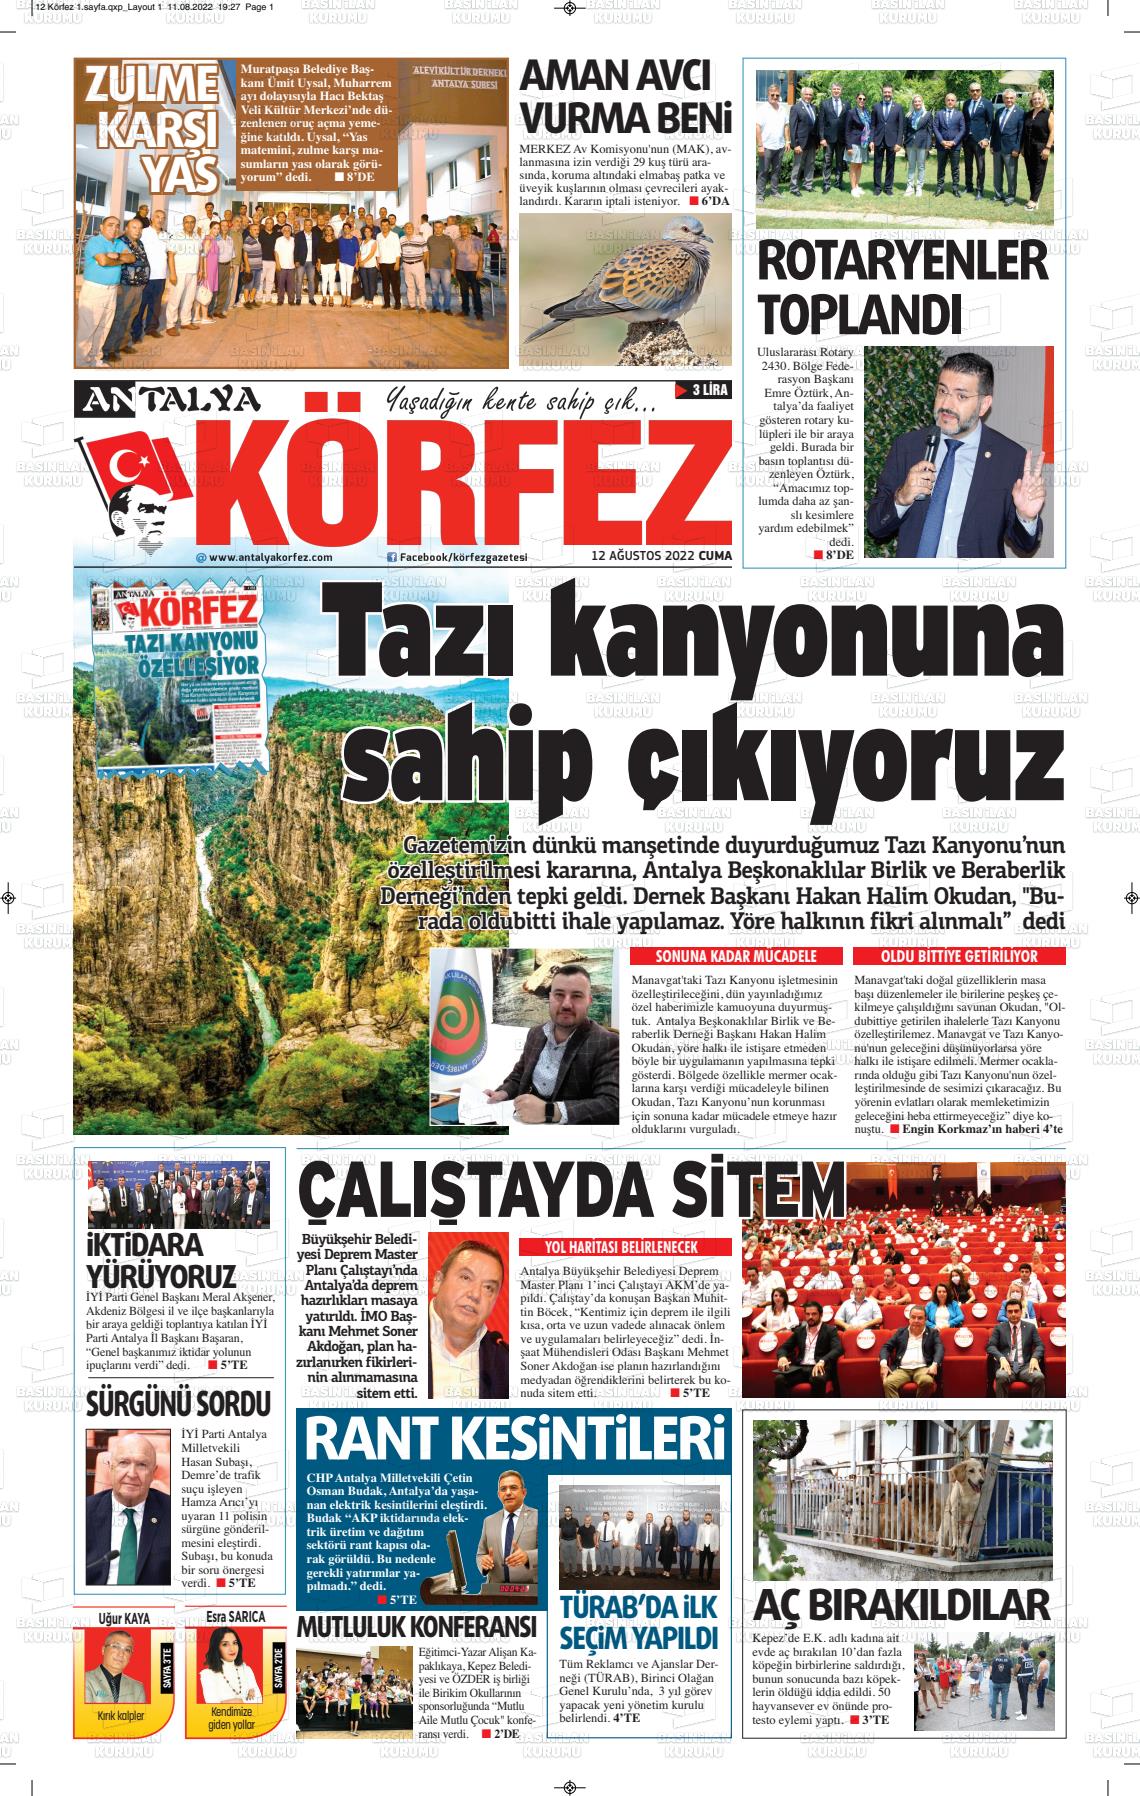 12 Ağustos 2022 Antalya Körfez Gazete Manşeti